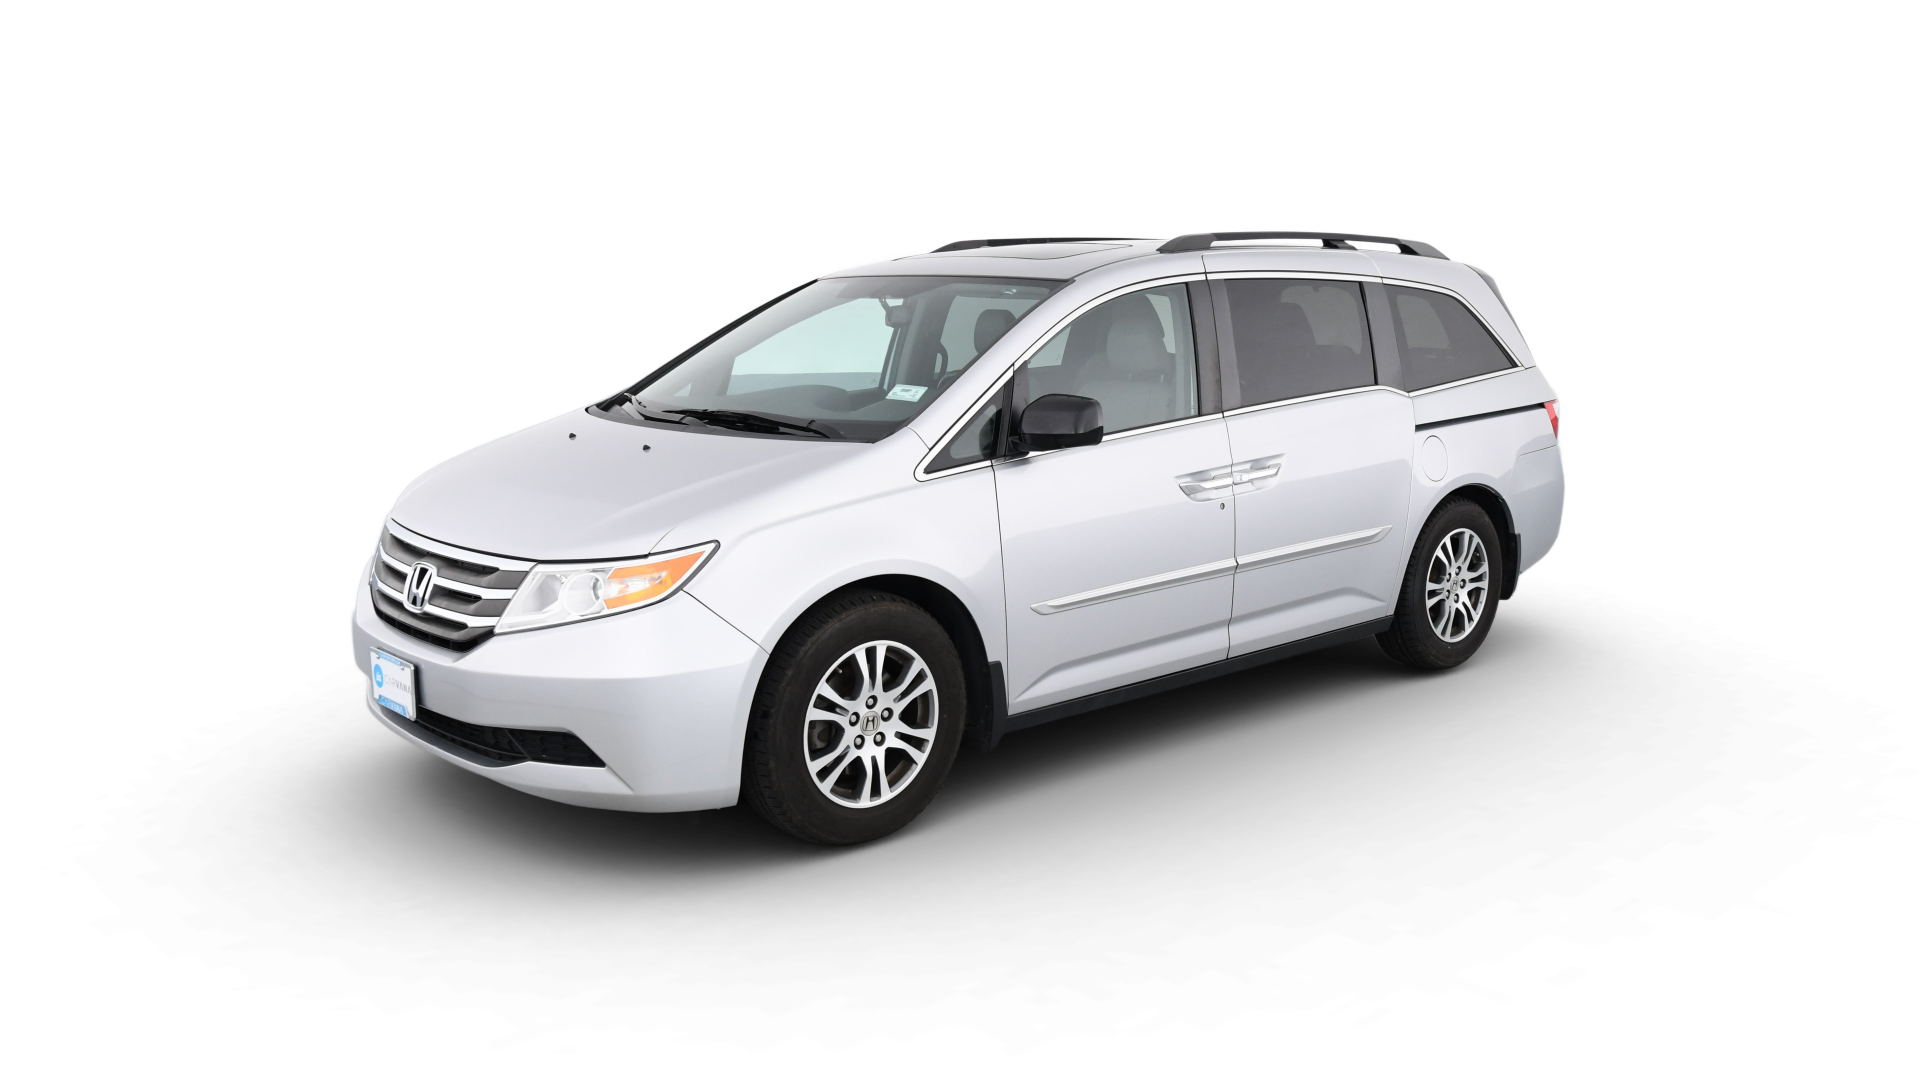 Used Honda Odyssey For Sale Online | Carvana